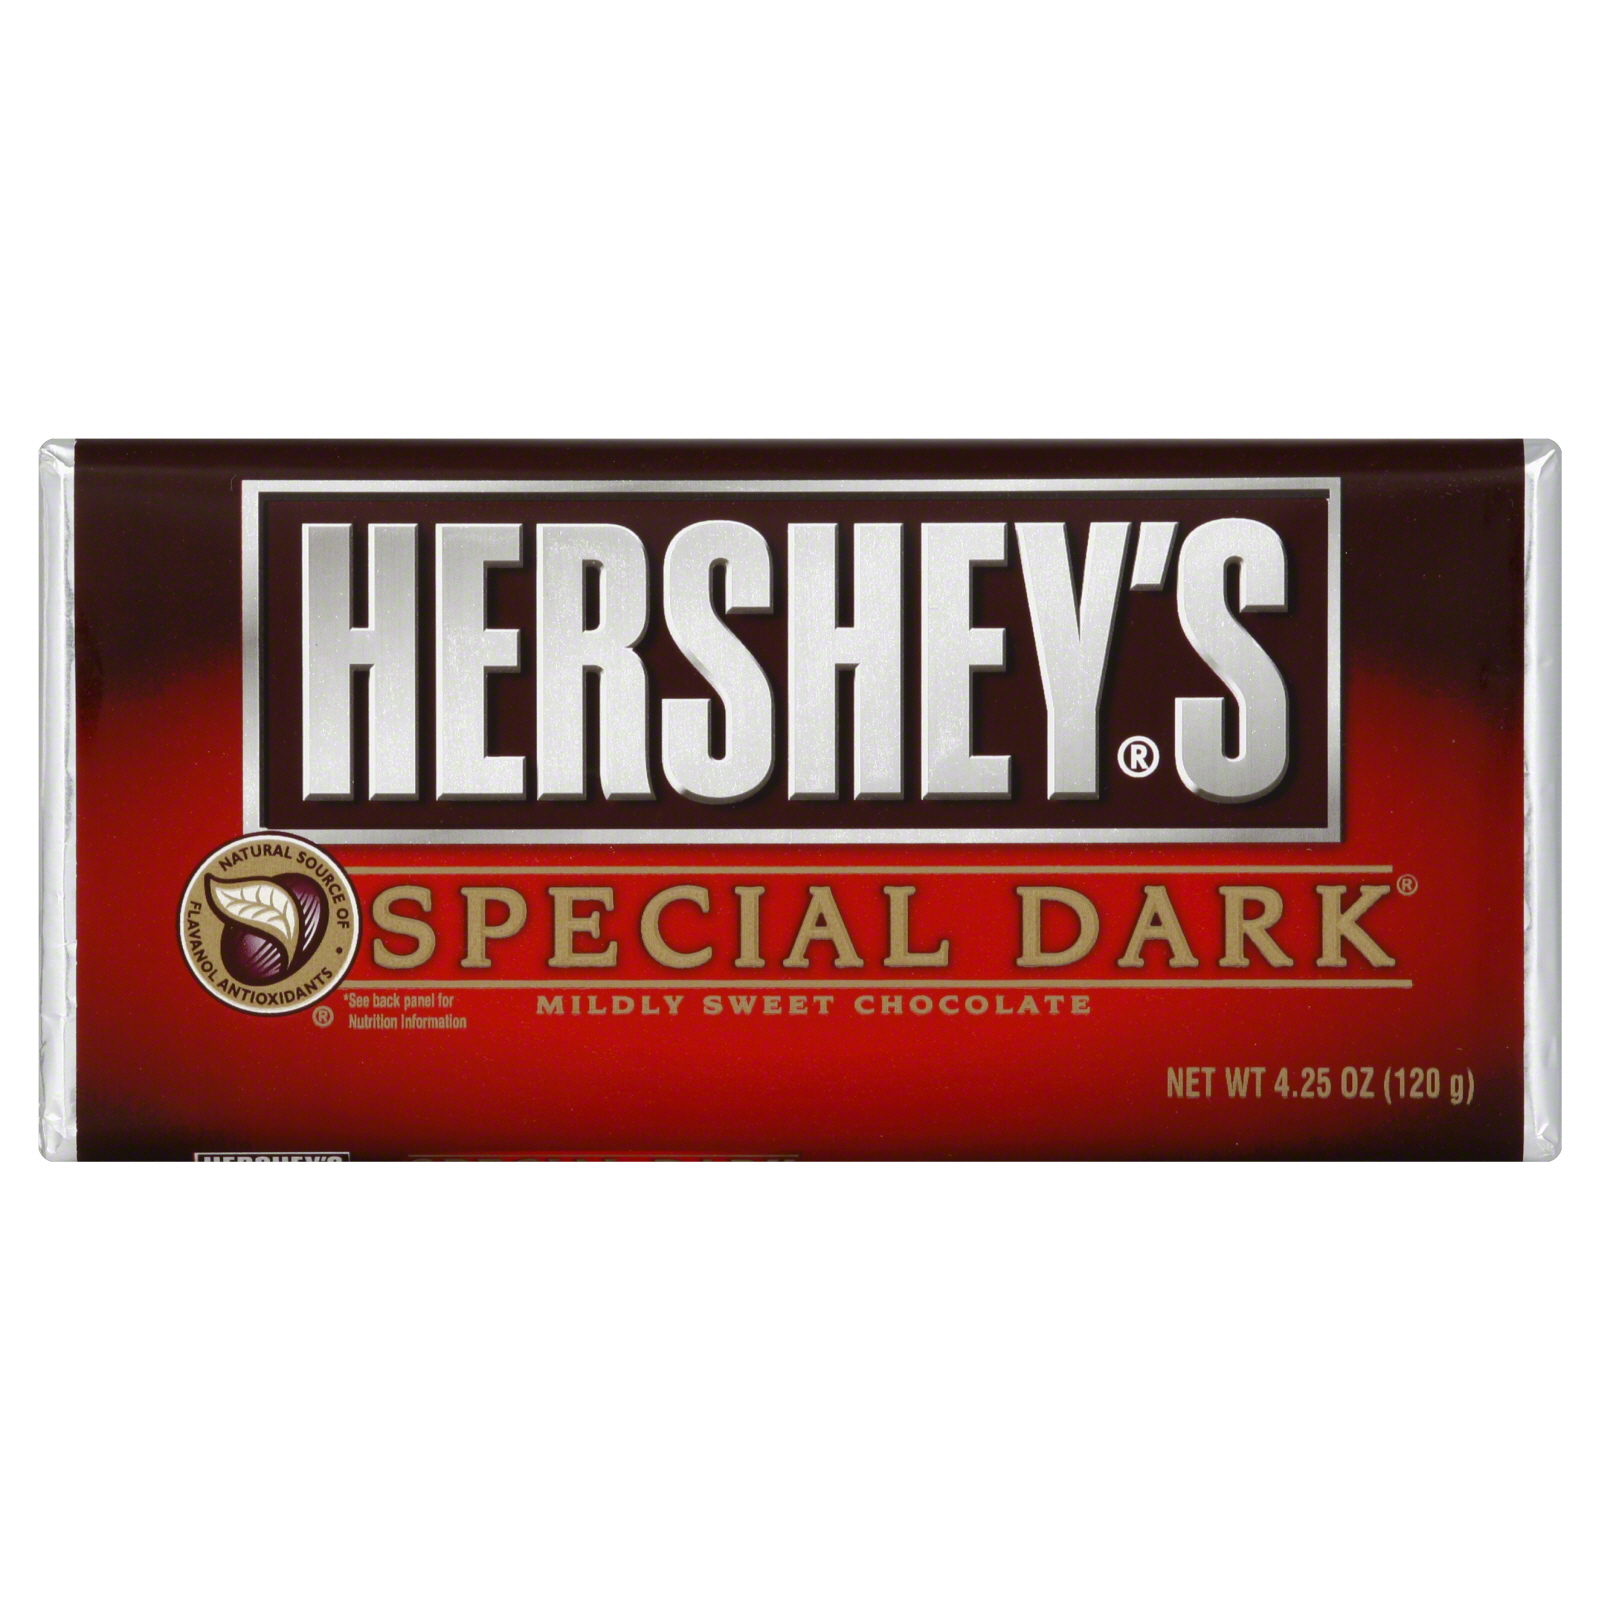 Hershey's Special Dark Mildly Sweet Chocolate, 4.25 oz (120 g)